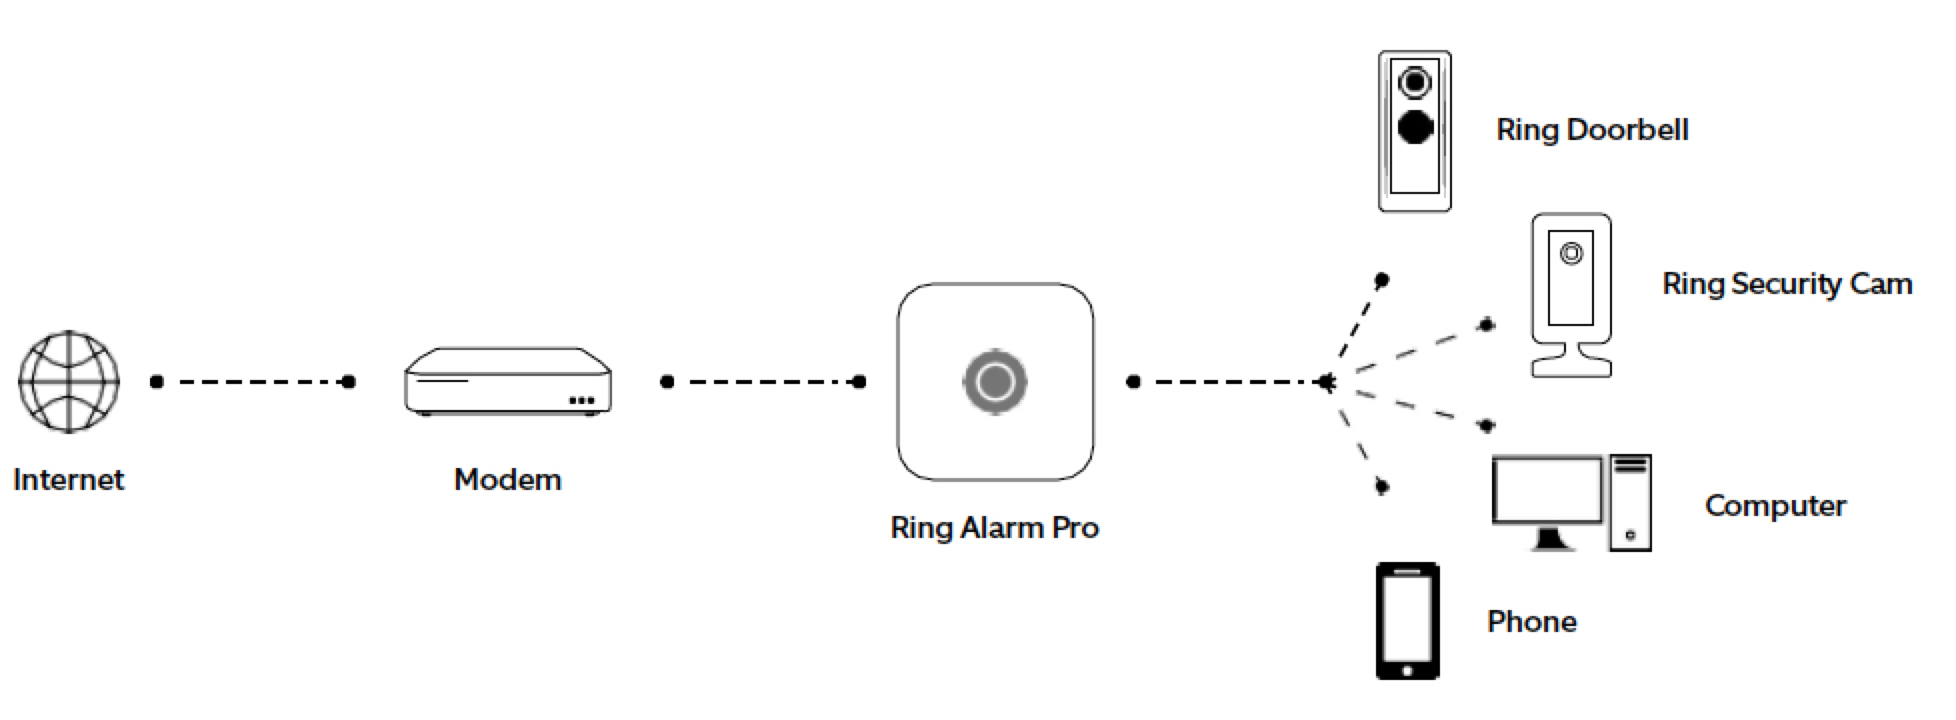 alarm_pro_router_setup.png